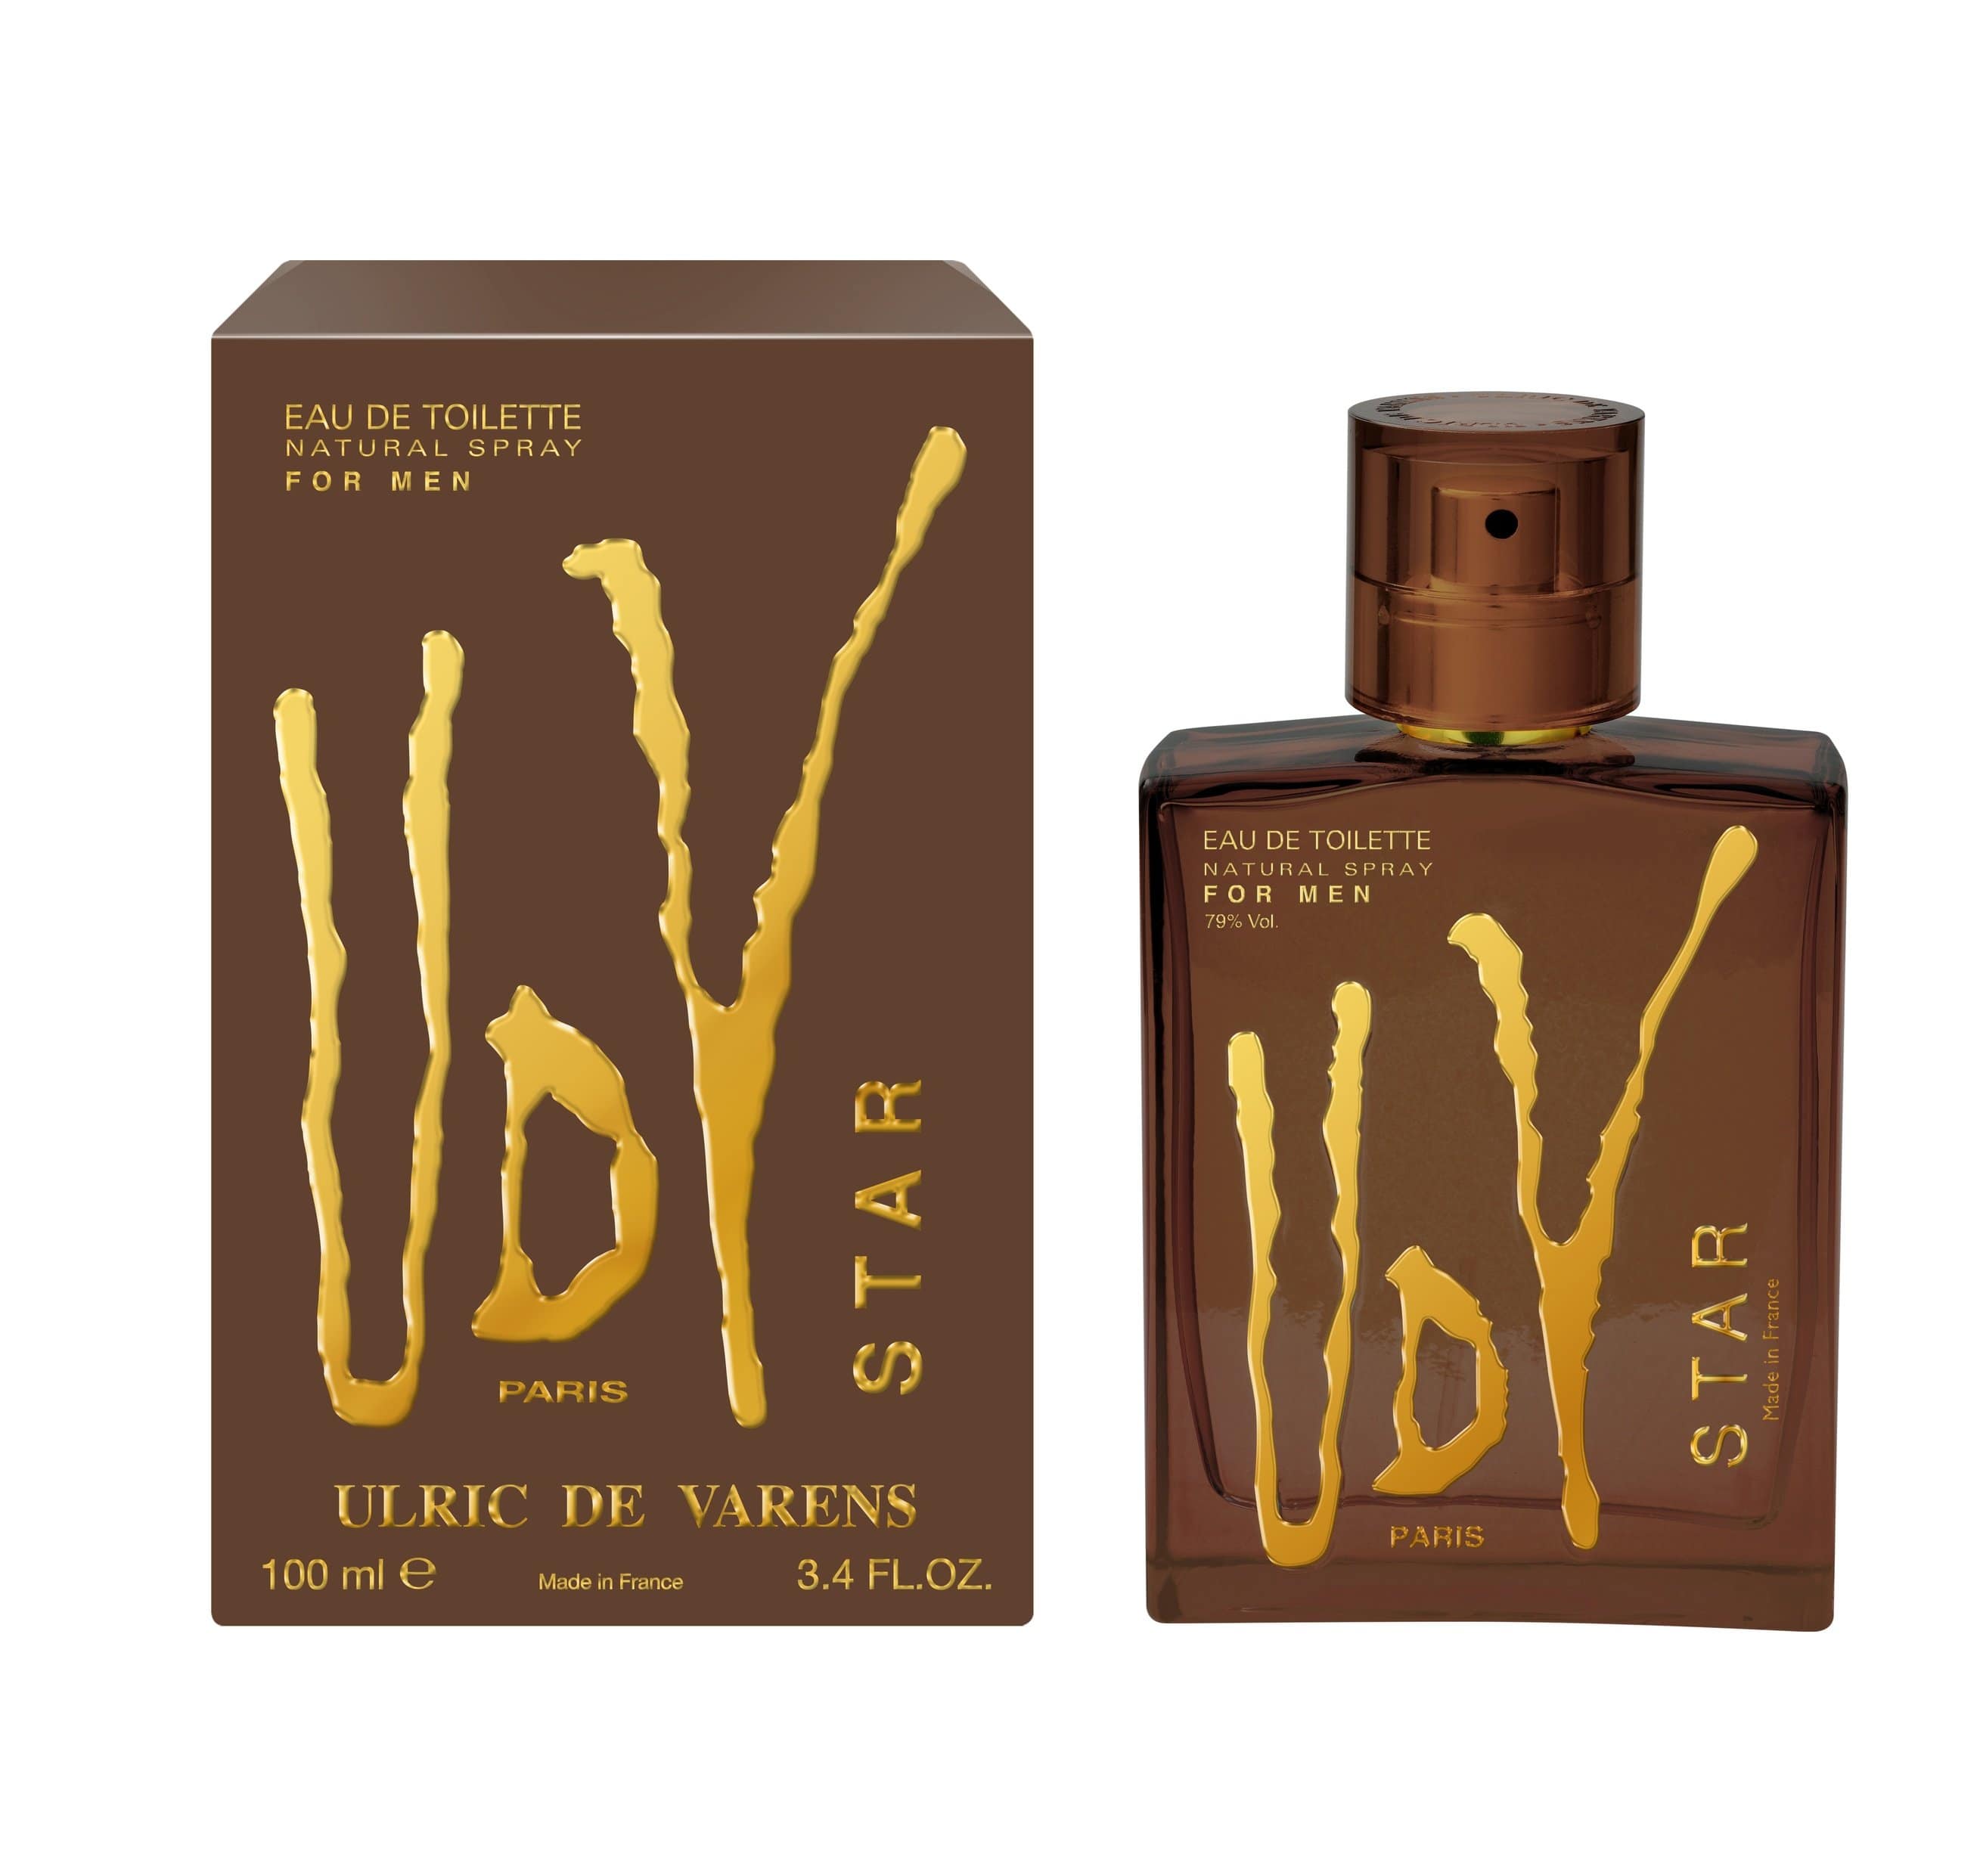 ULRIC DE VARENS perfume for men STAR  Eau de Toilette, 100 ml6545 - Jashanmal Home